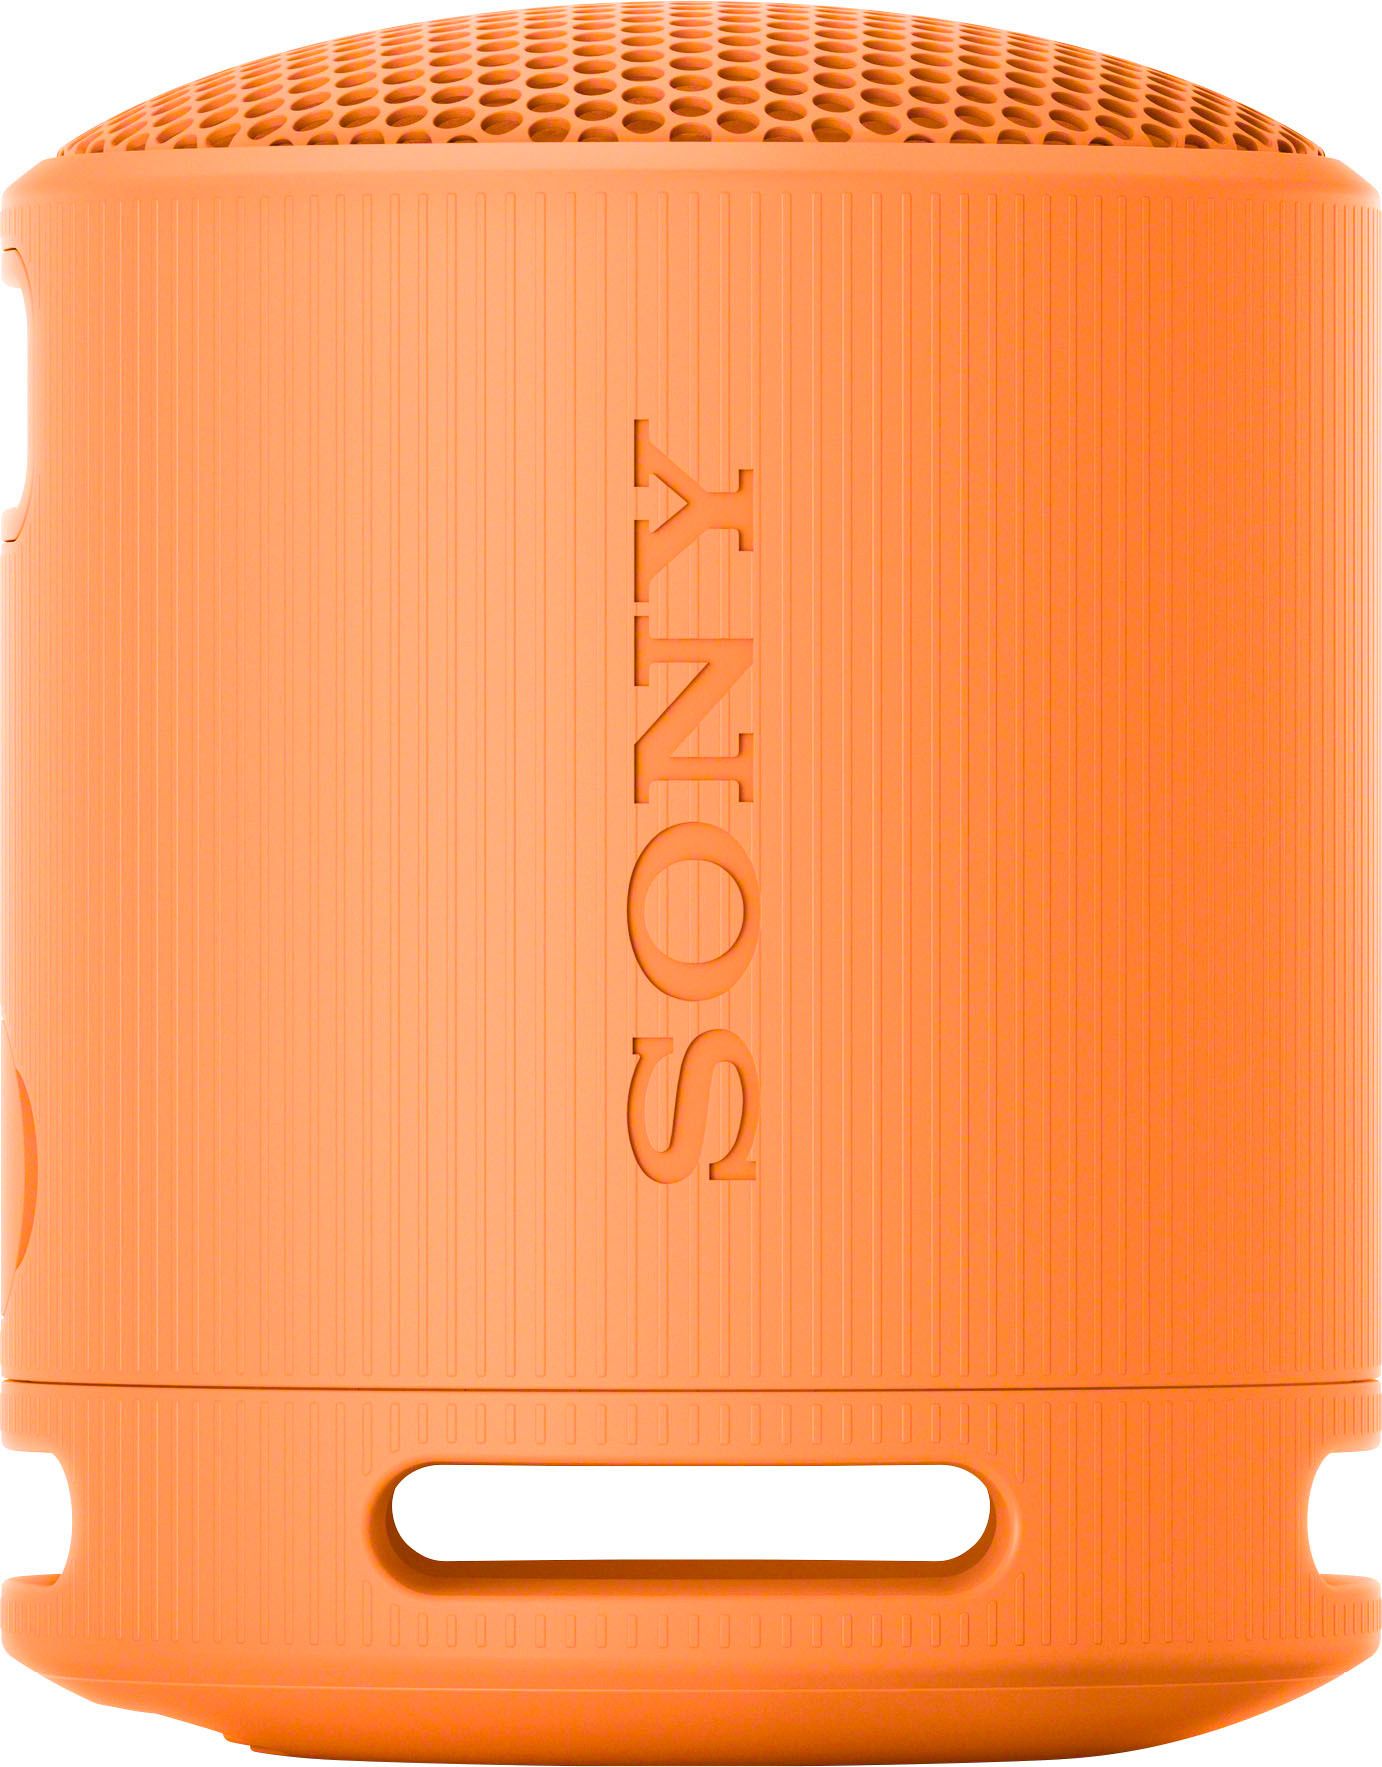 Sony XB100 Compact Bluetooth Speaker Orange SRSXB100/D - Best Buy | Best Buy U.S.